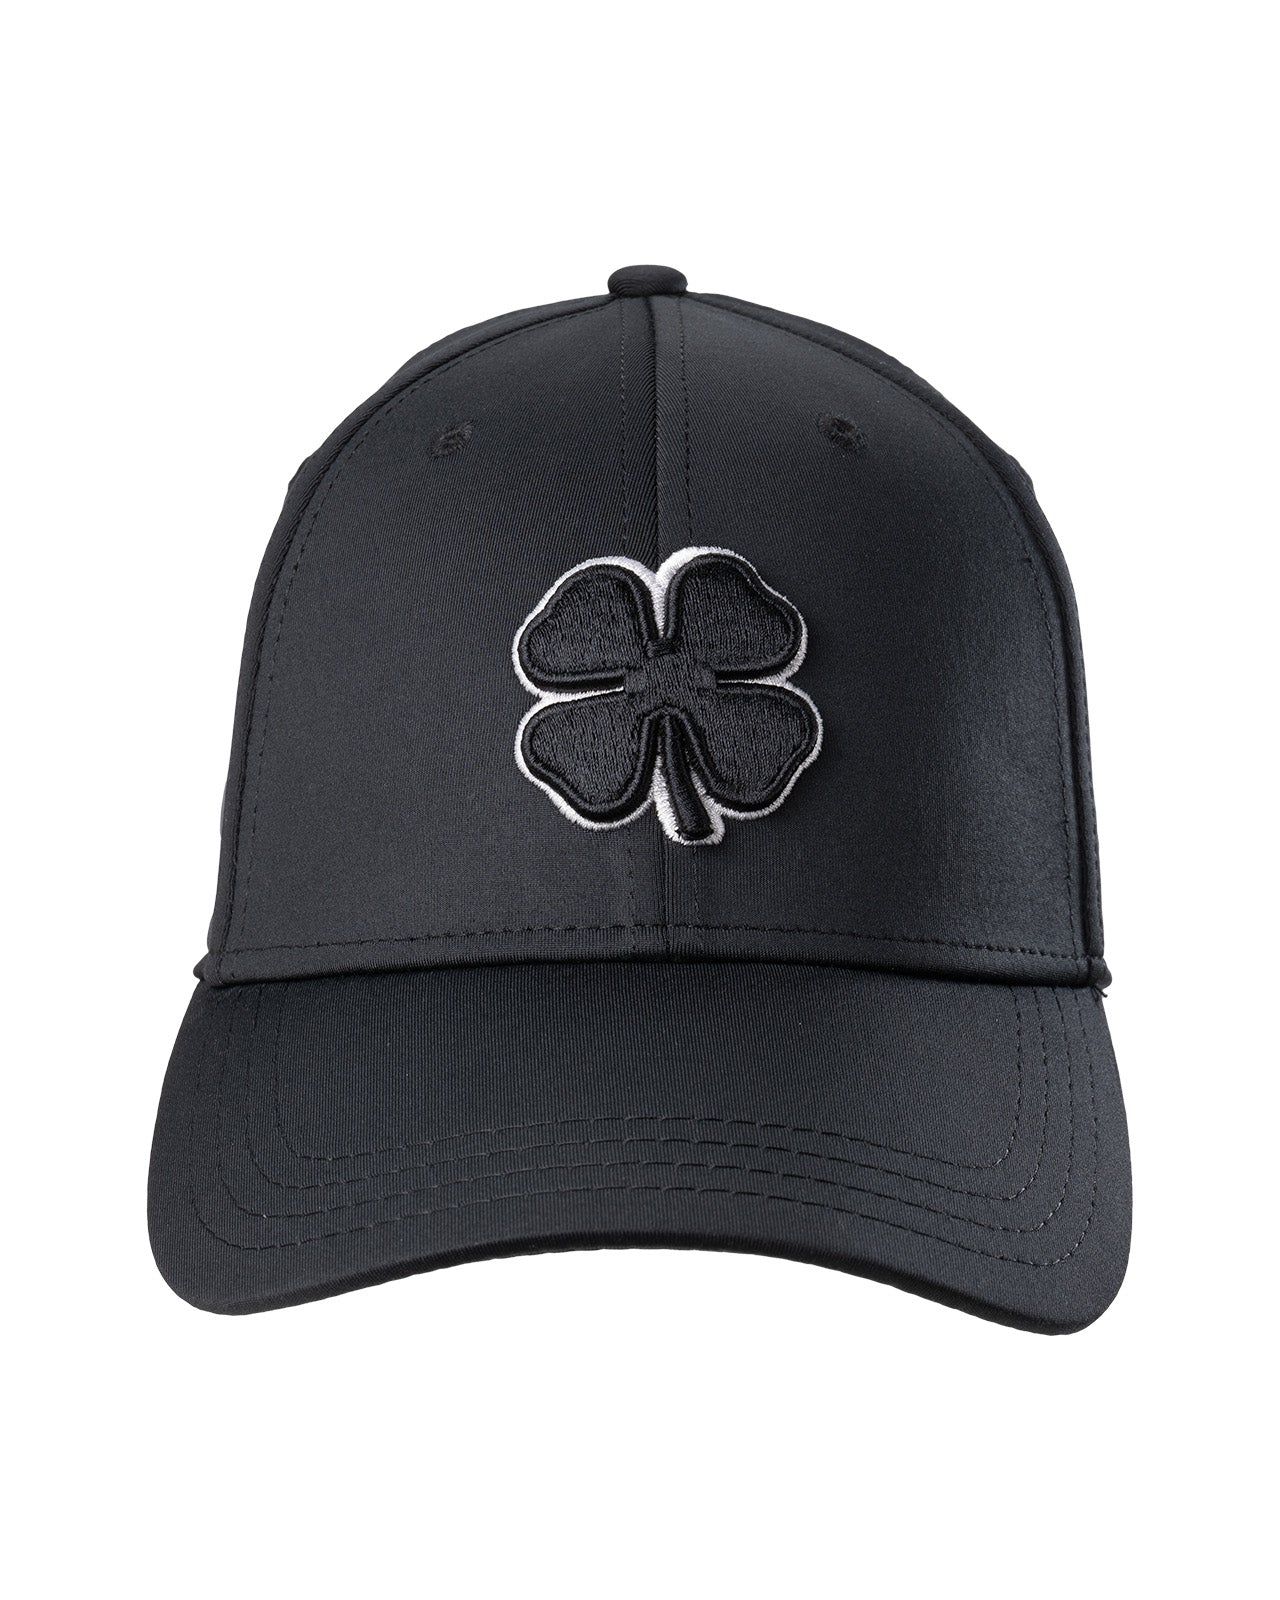 Premium Clover 2 Black Fitted Hat | Black Clover